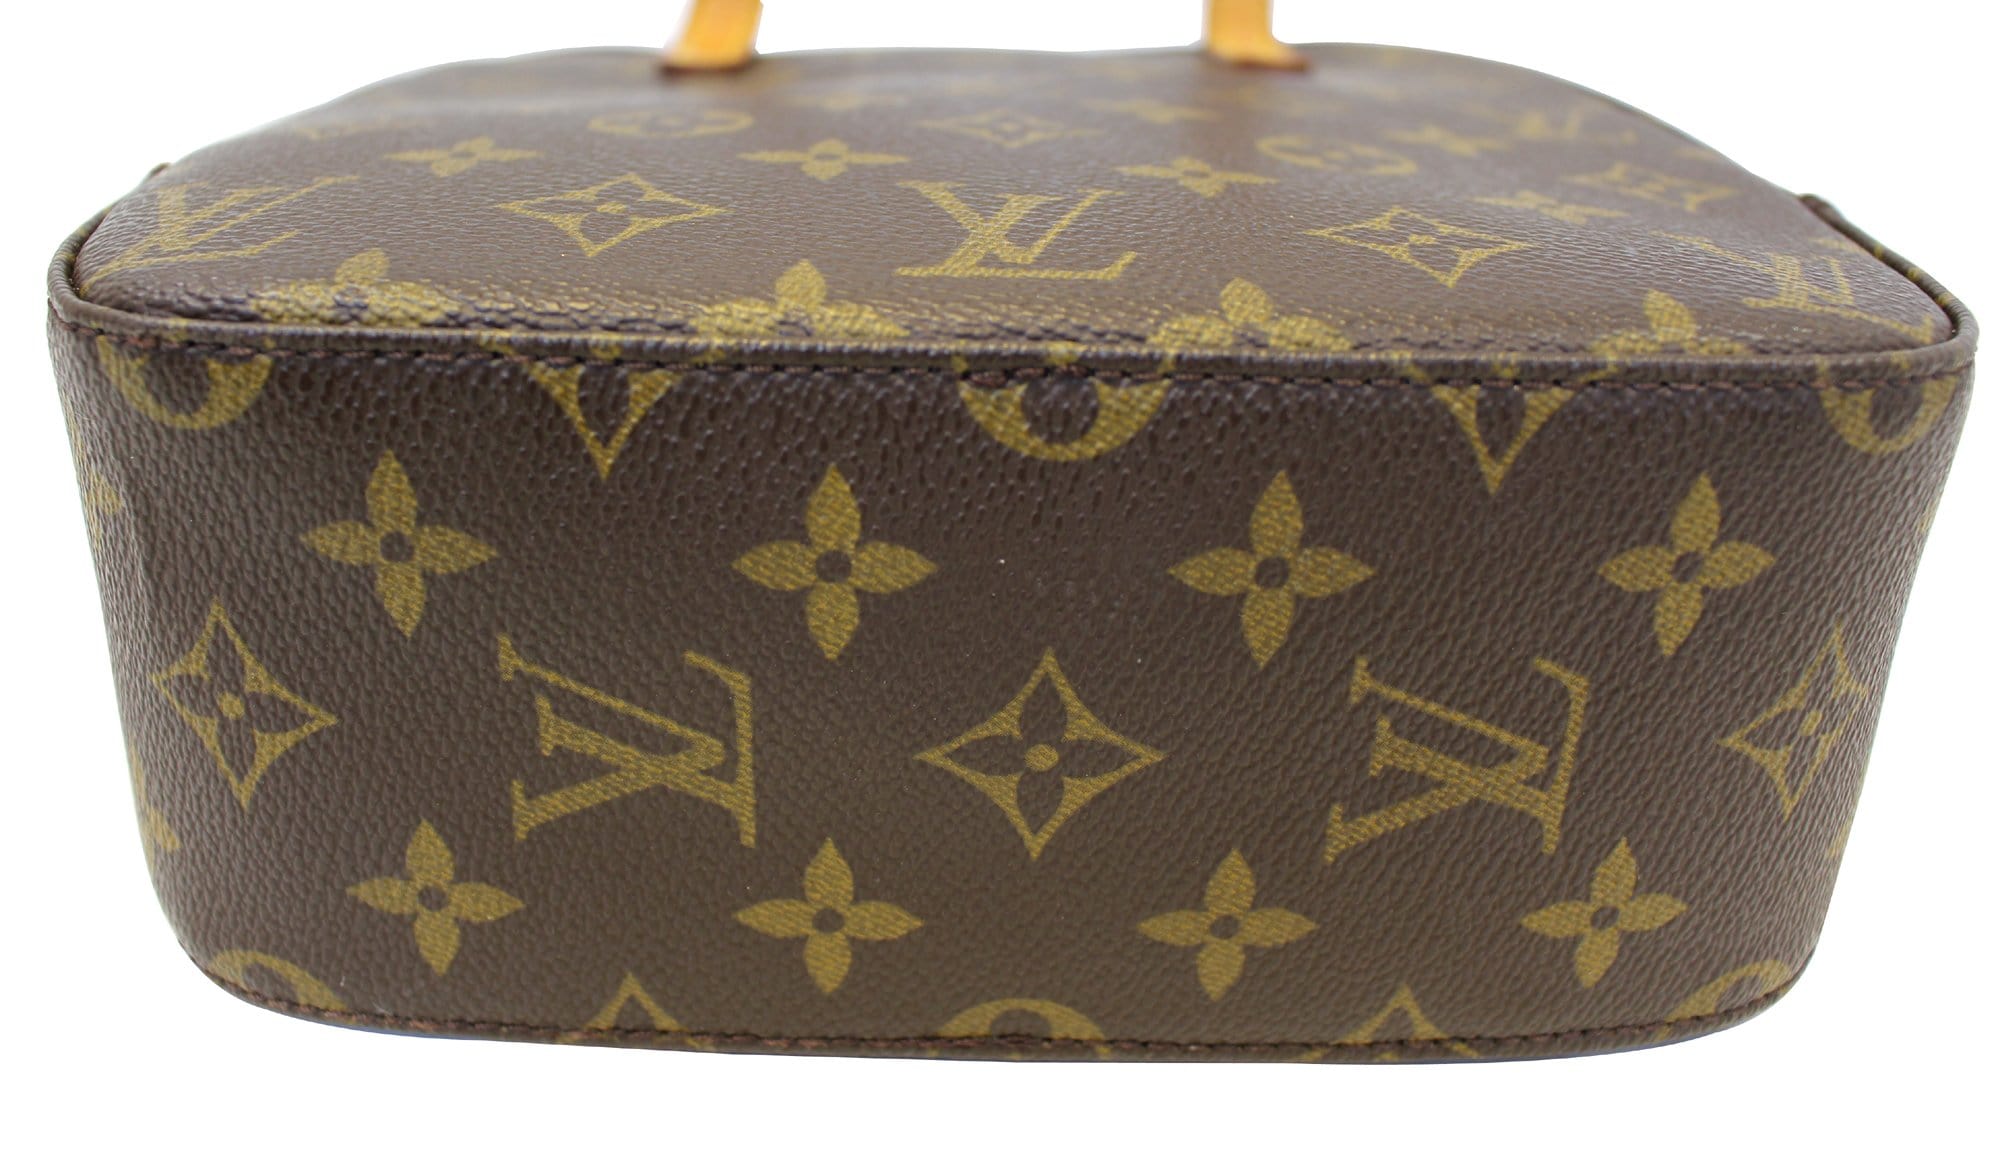 Louis Vuitton pre-owned Spontini 2way bag